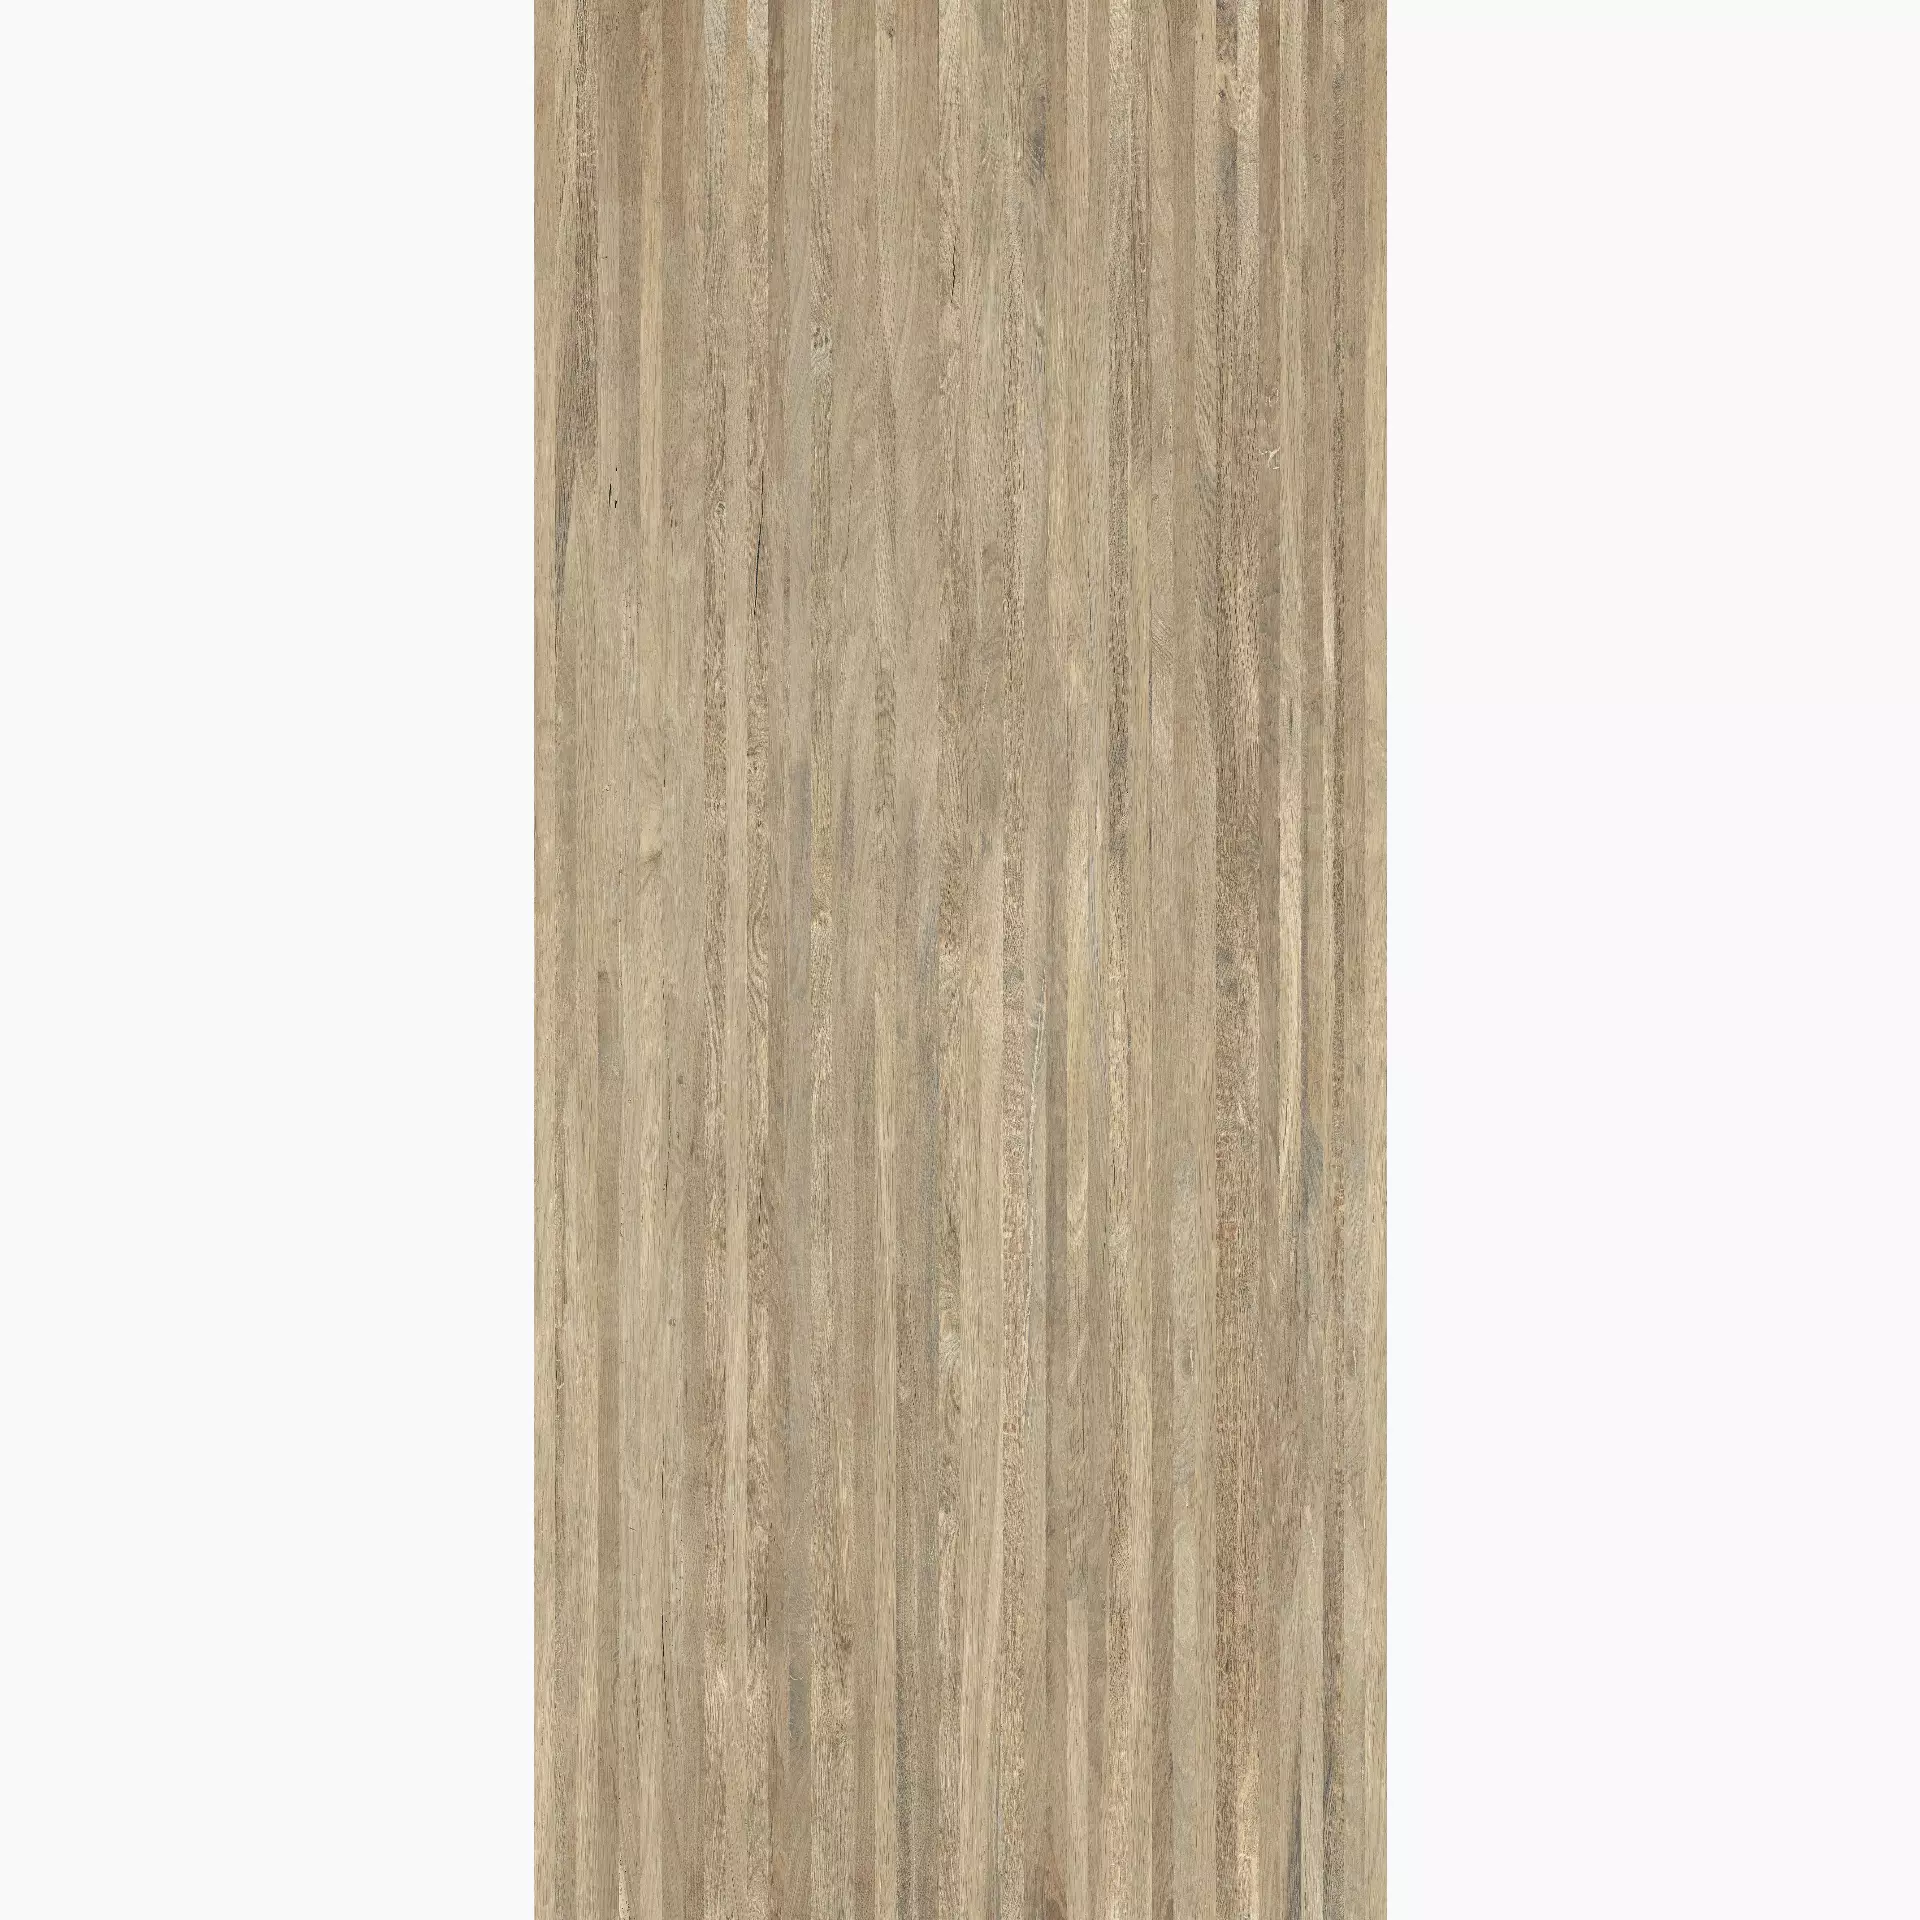 Fondovalle Woodblock Brave Stripy Oak 3D Real Matt Brave Stripy Oak WOB013 matt 120x278cm Dekor Stripy rektifiziert 6,5mm